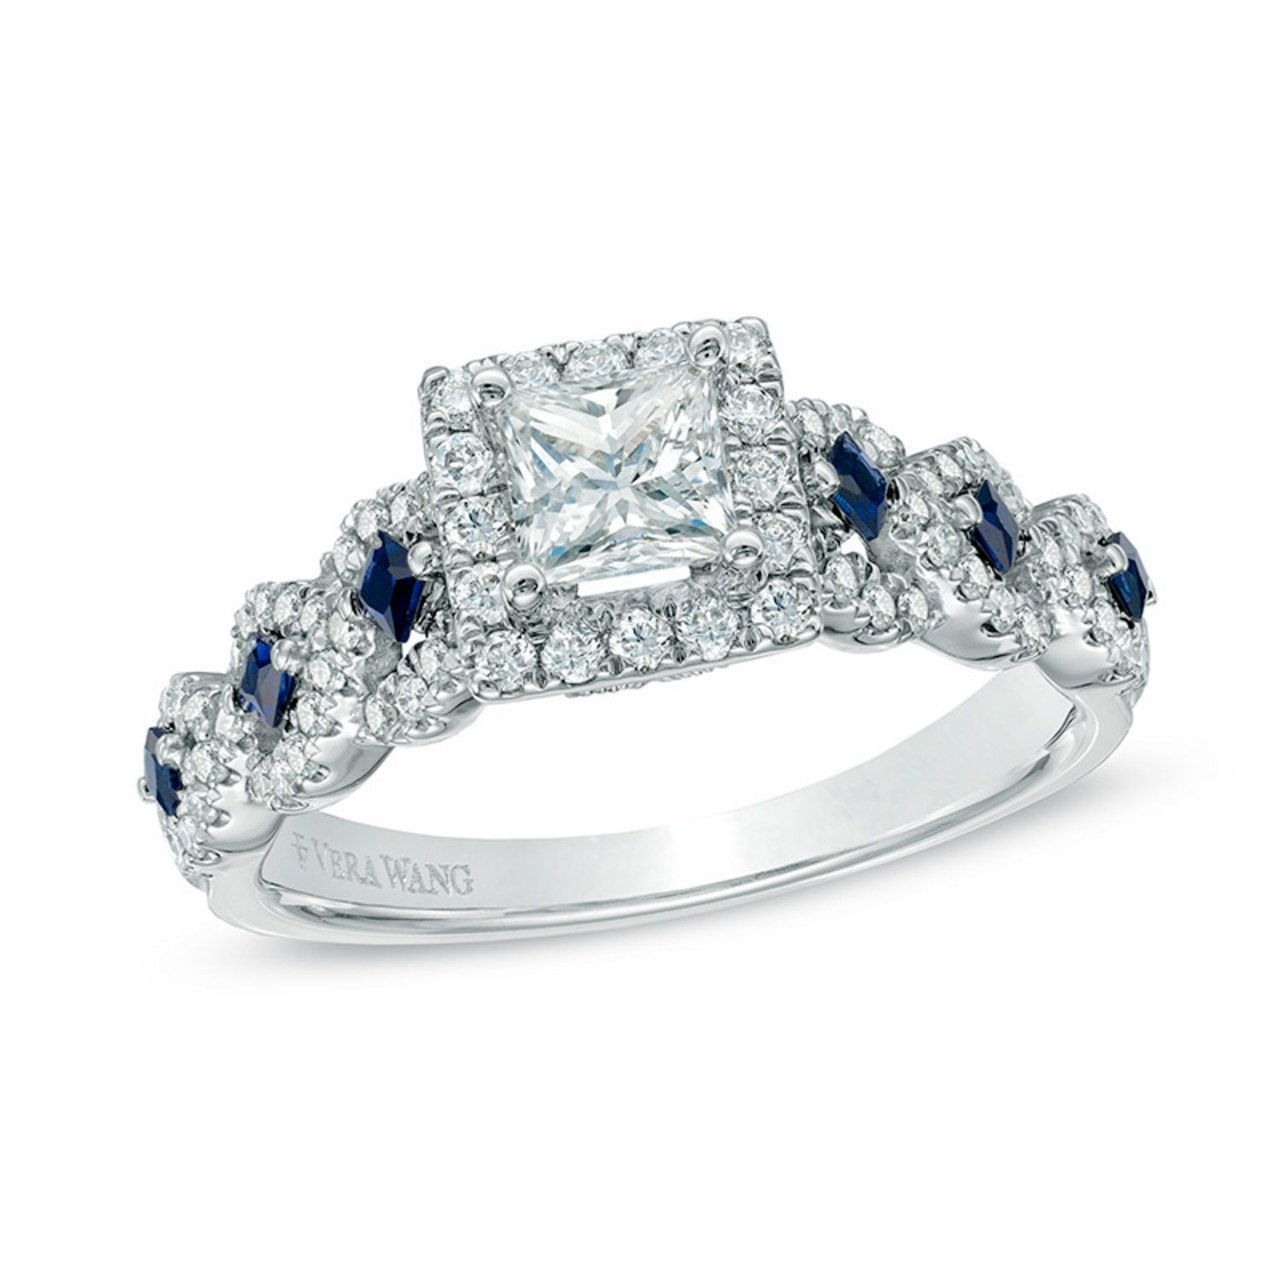 1b sapphire engagement rings 1026 courtesy vera wang love